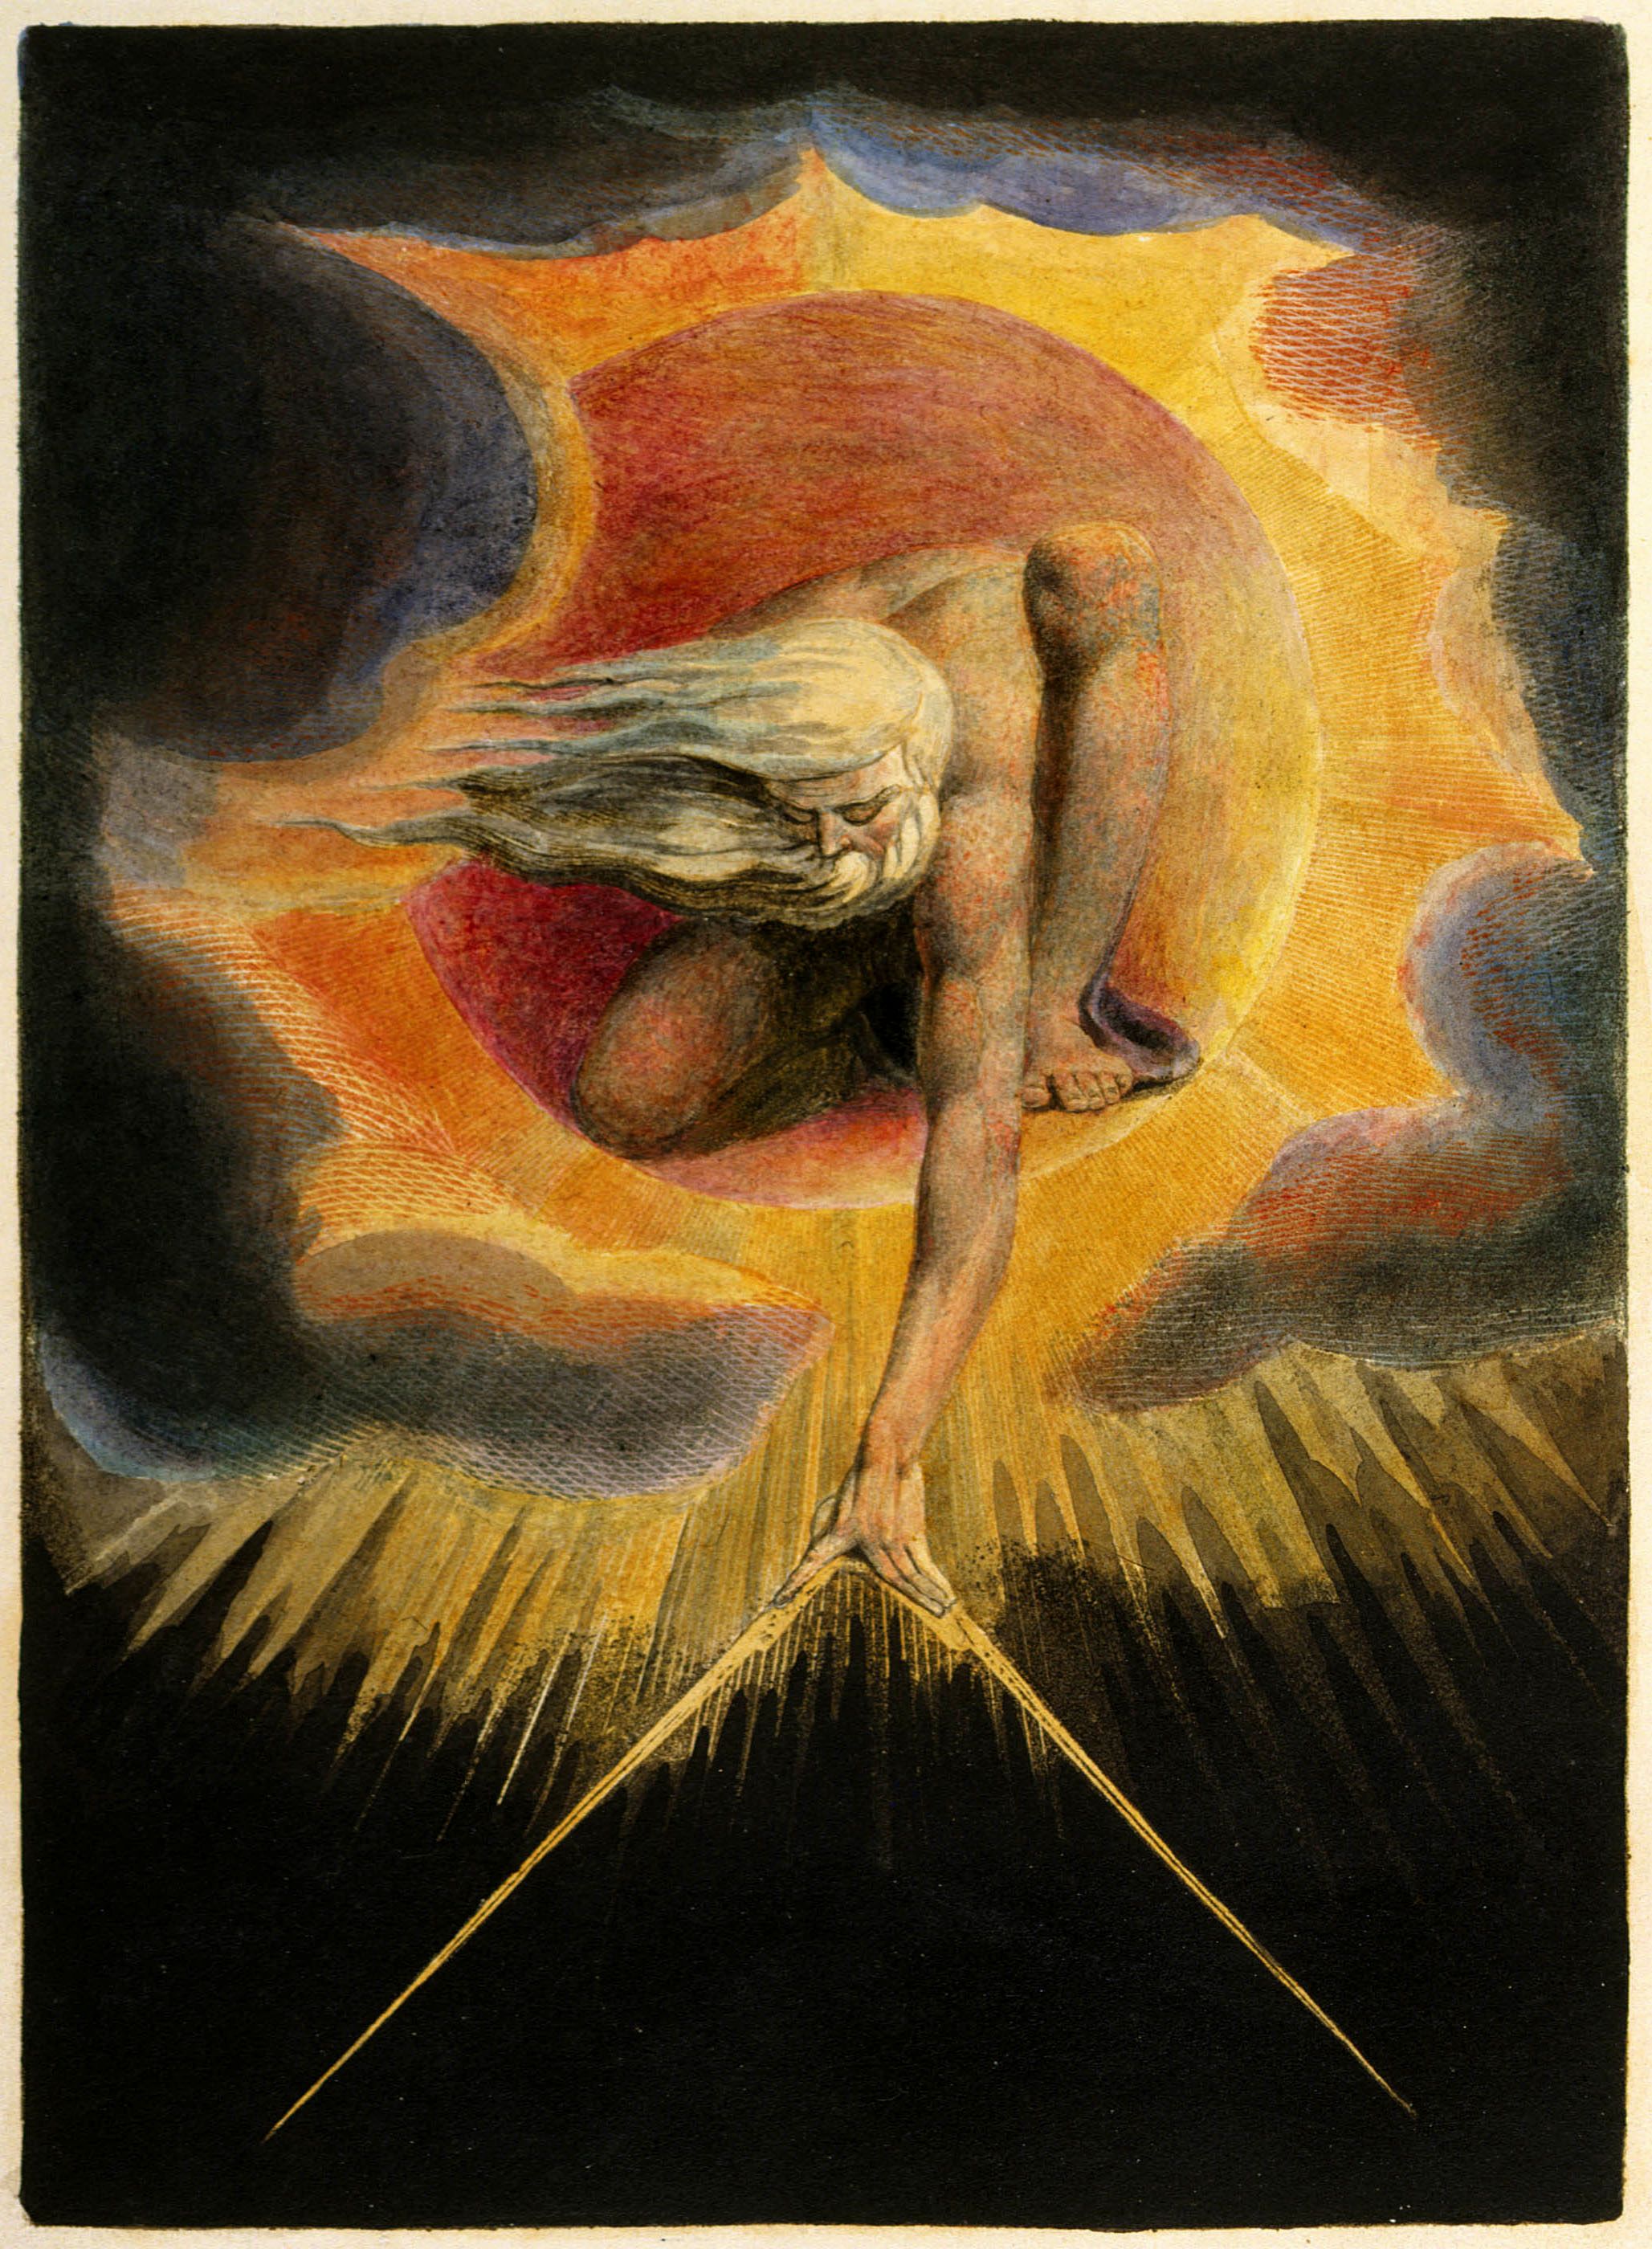 Ancient of Days by William Blake - 1794 - 23.3 x 16.8 cm British Museum